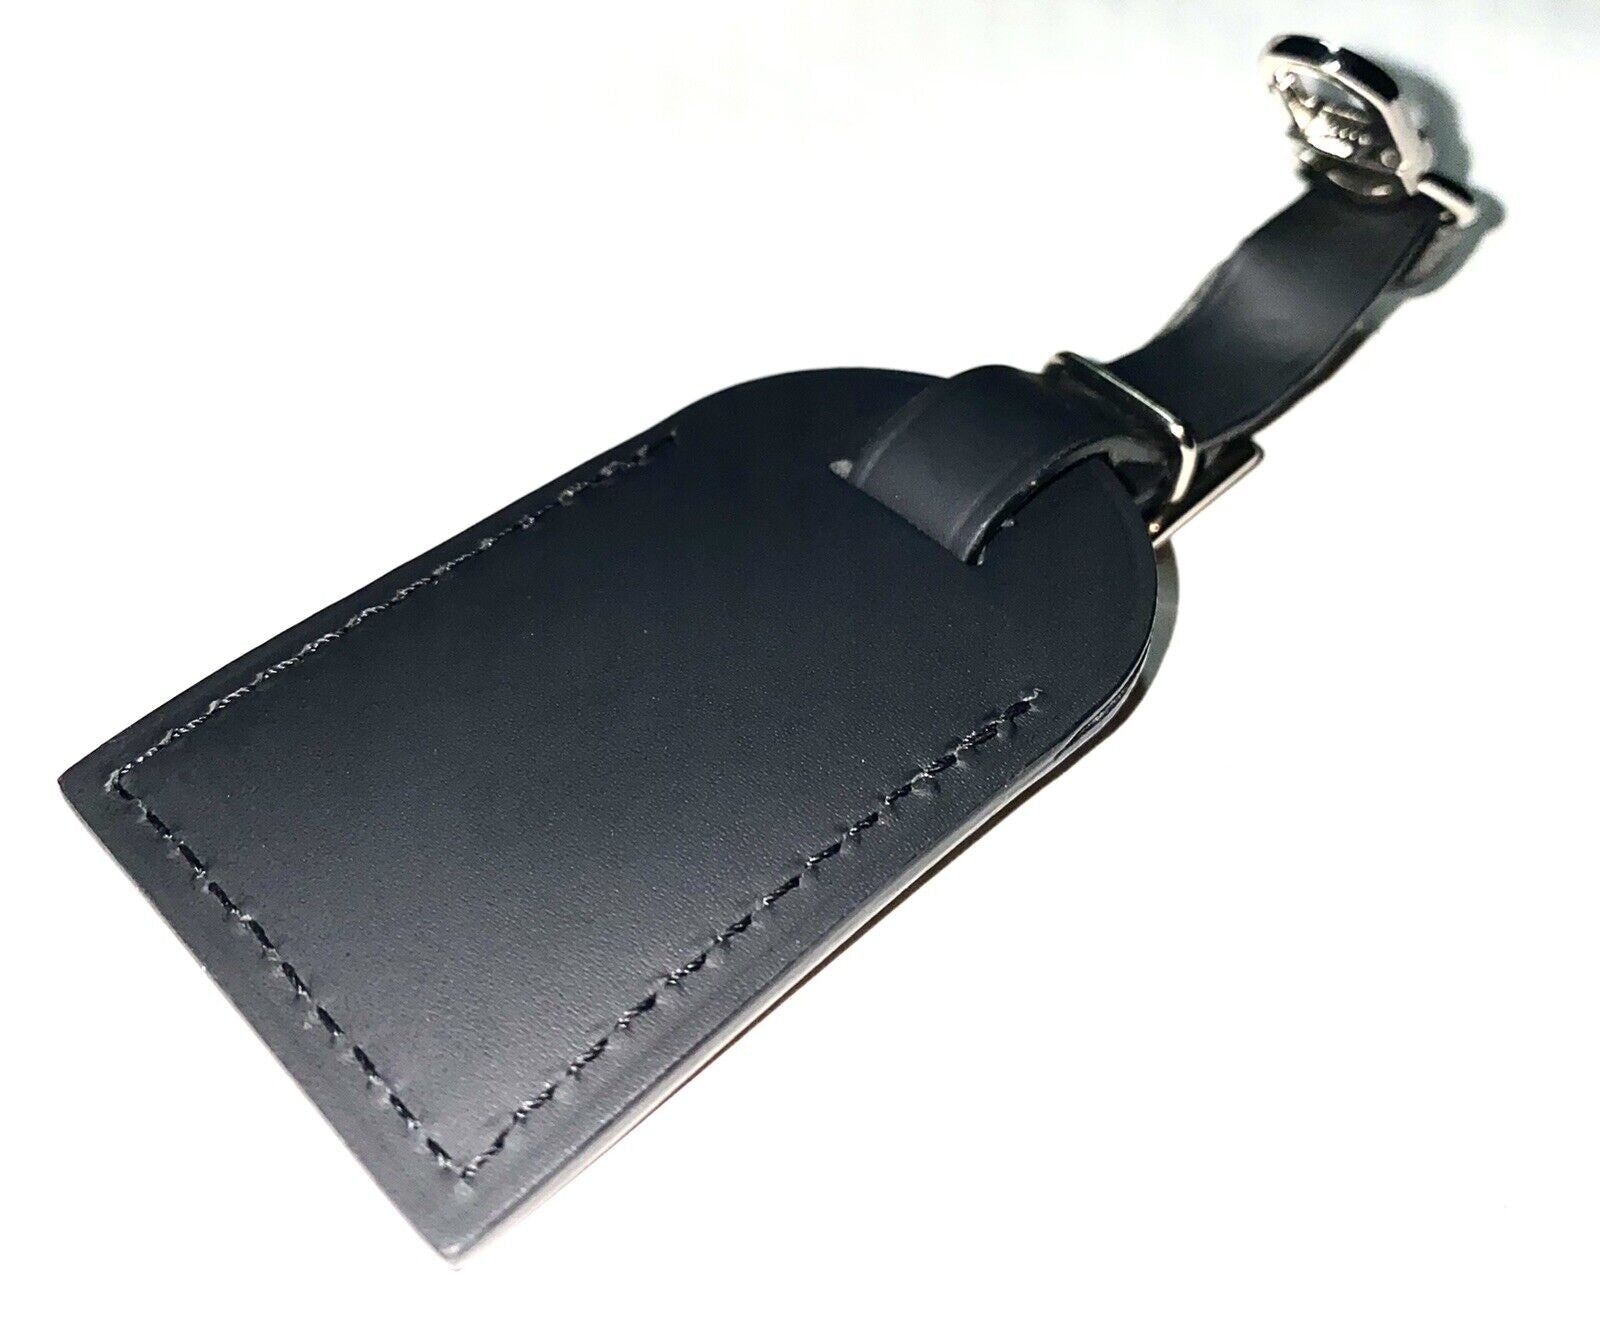 Louis Vuitton Name Tag FA - Black Leather Small Goldtone or Silvertone